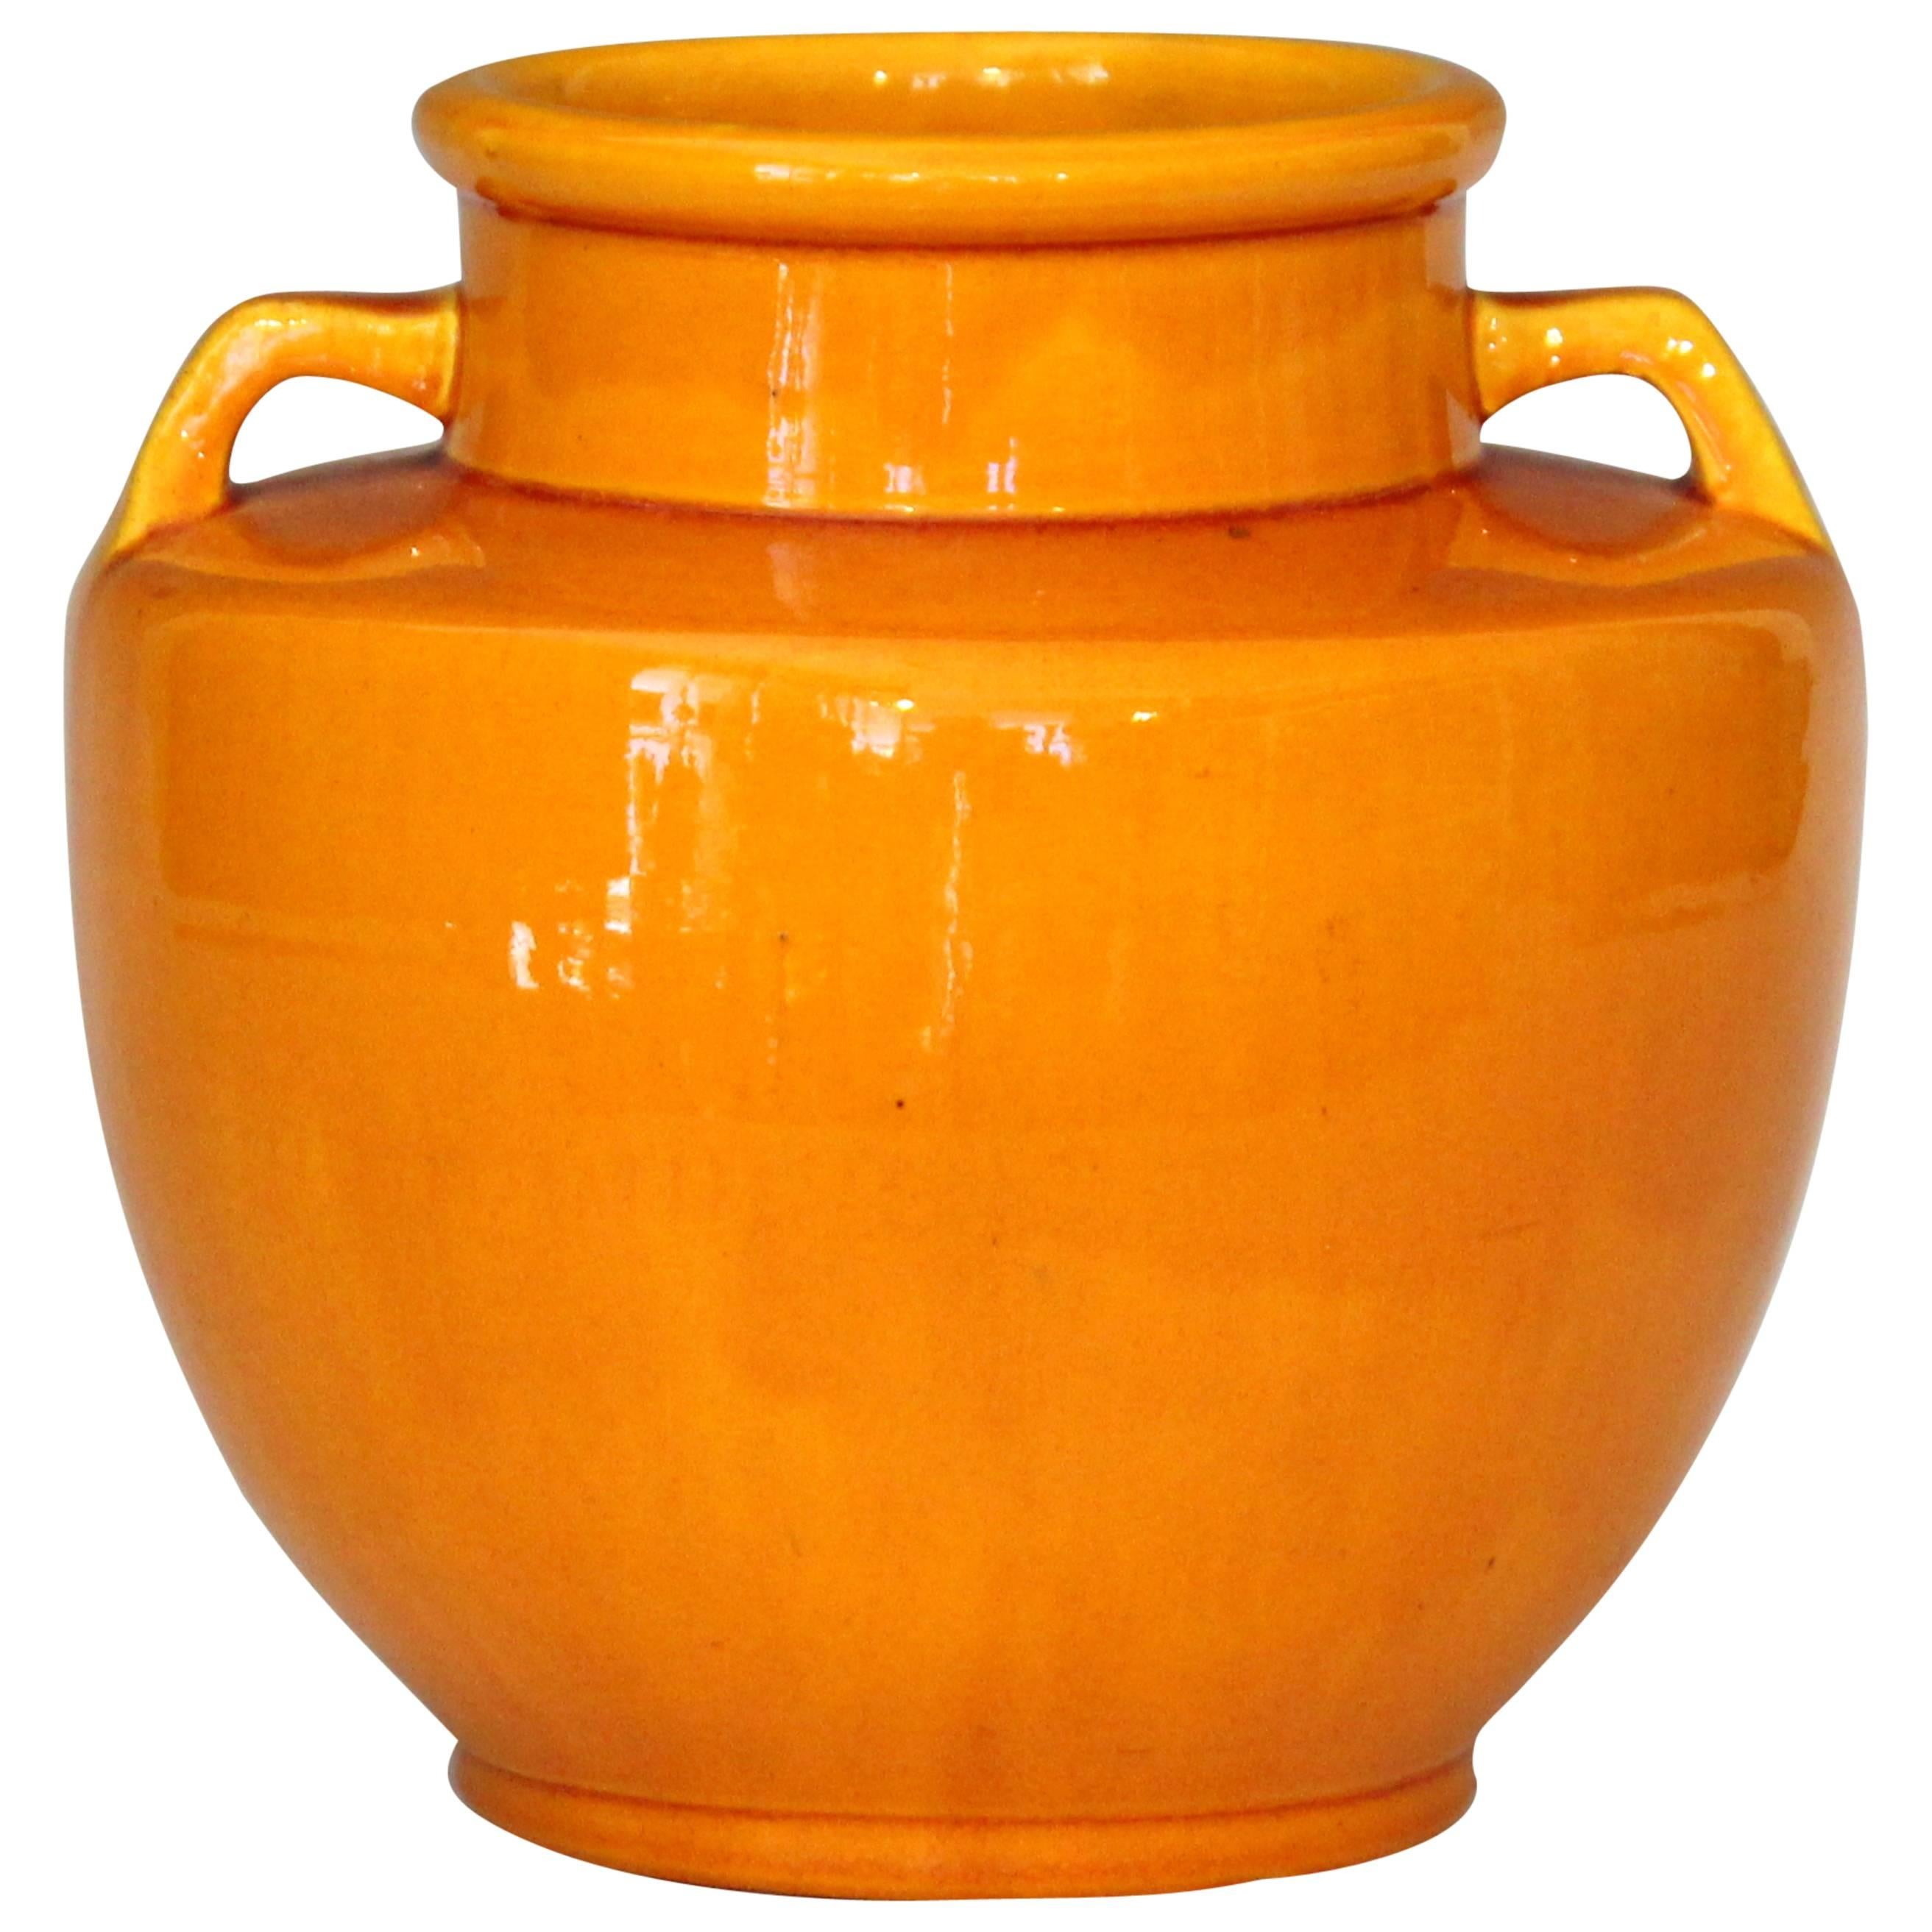 Awaji Pottery Japanese Art Deco Vase with Bright Yellow Monochrome Glaze For Sale